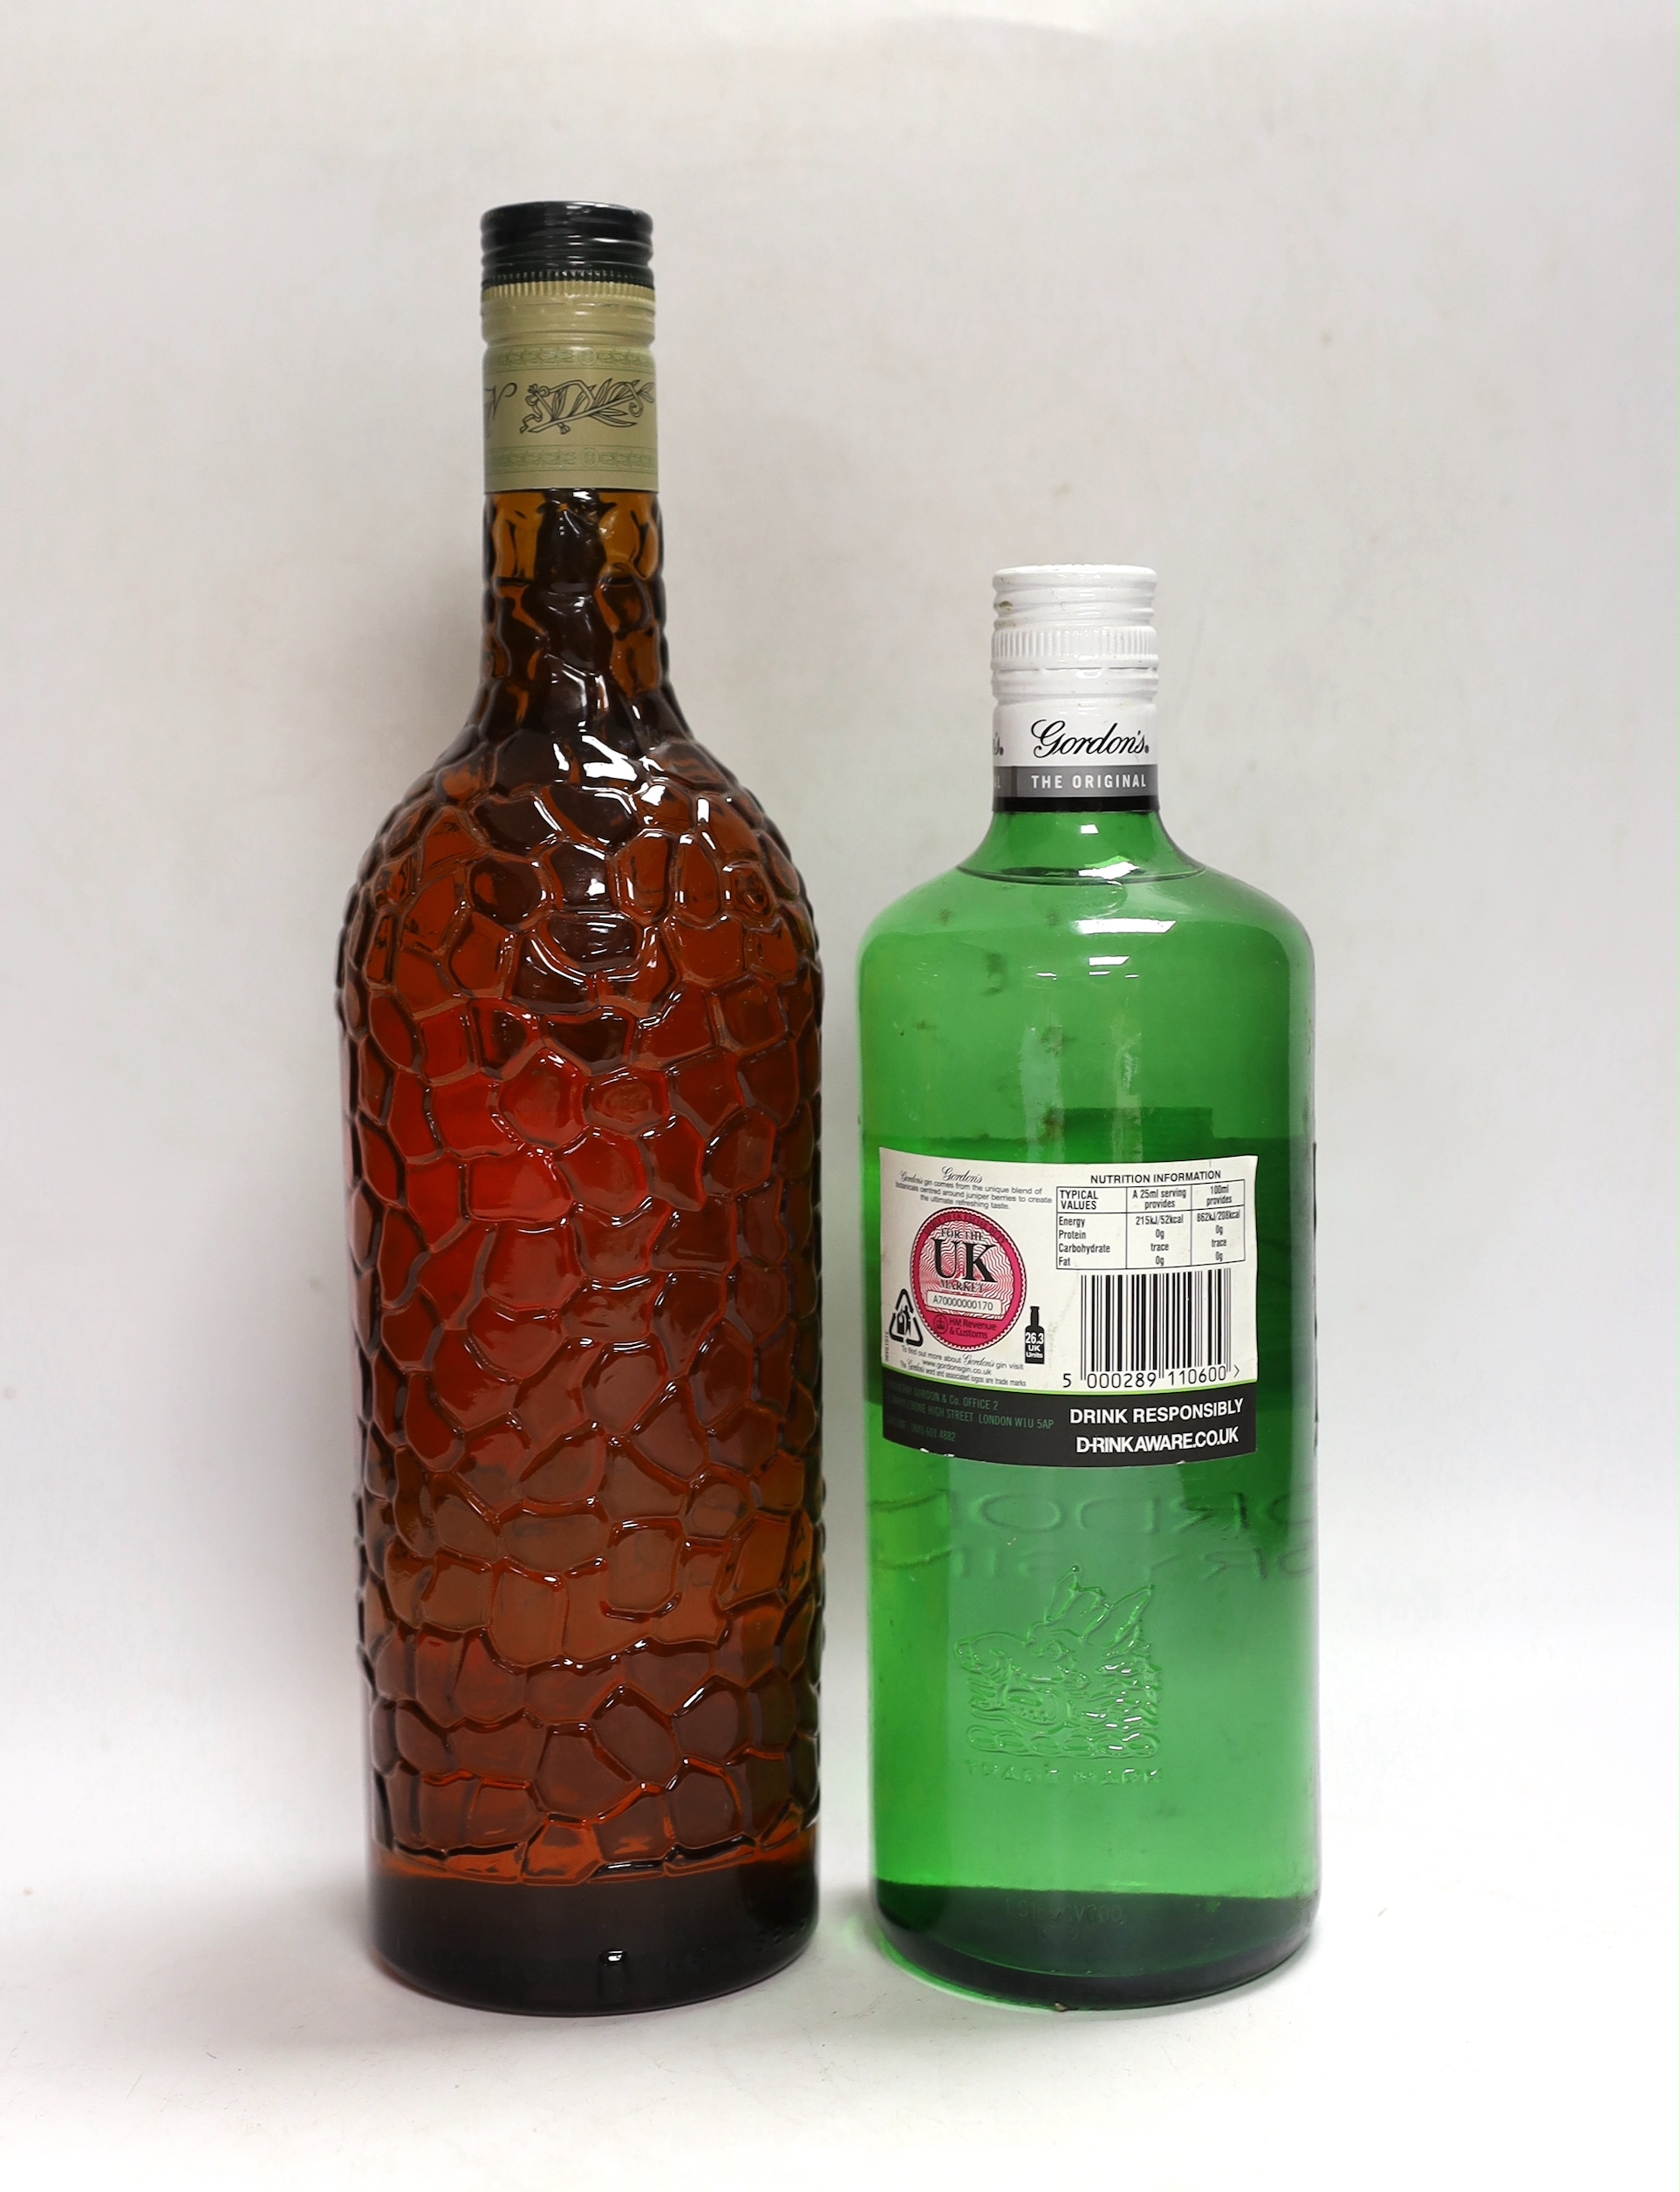 A bottle of Mandarine Napoleon brandy and a Gordon's gin